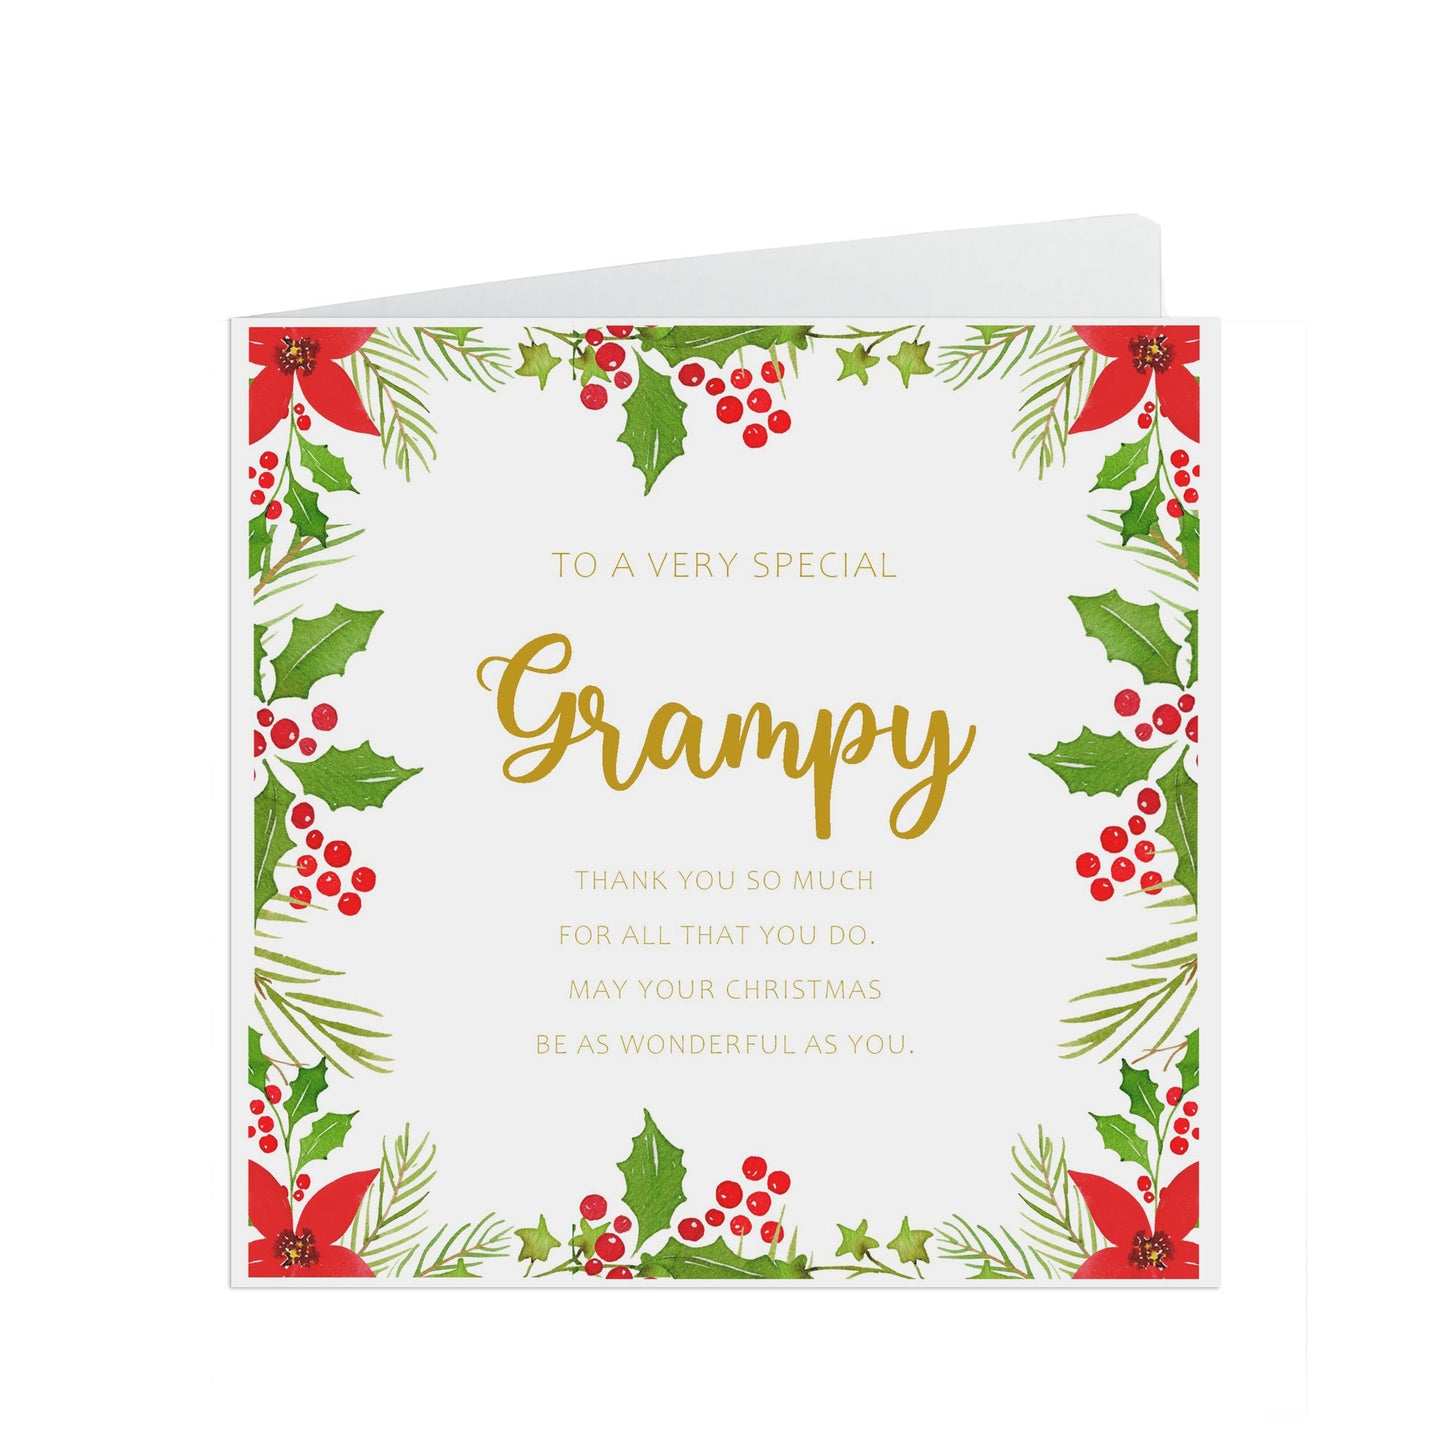 Grampy Christmas Card, Traditional Poinsettia Design